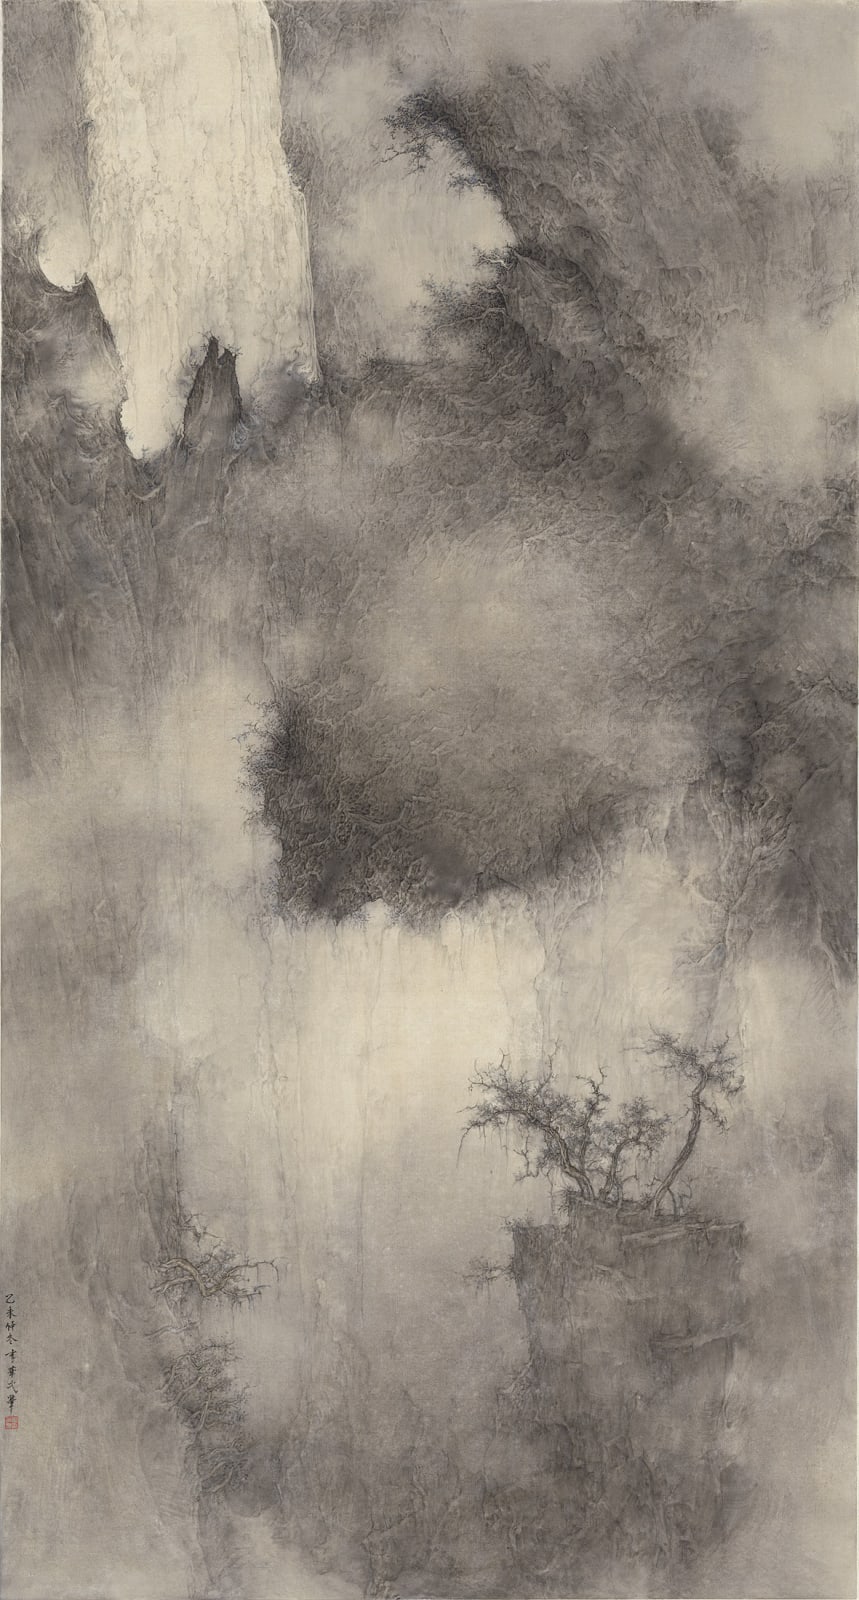 Li Huayi 李華弌, Untitled 《無題》, 2015